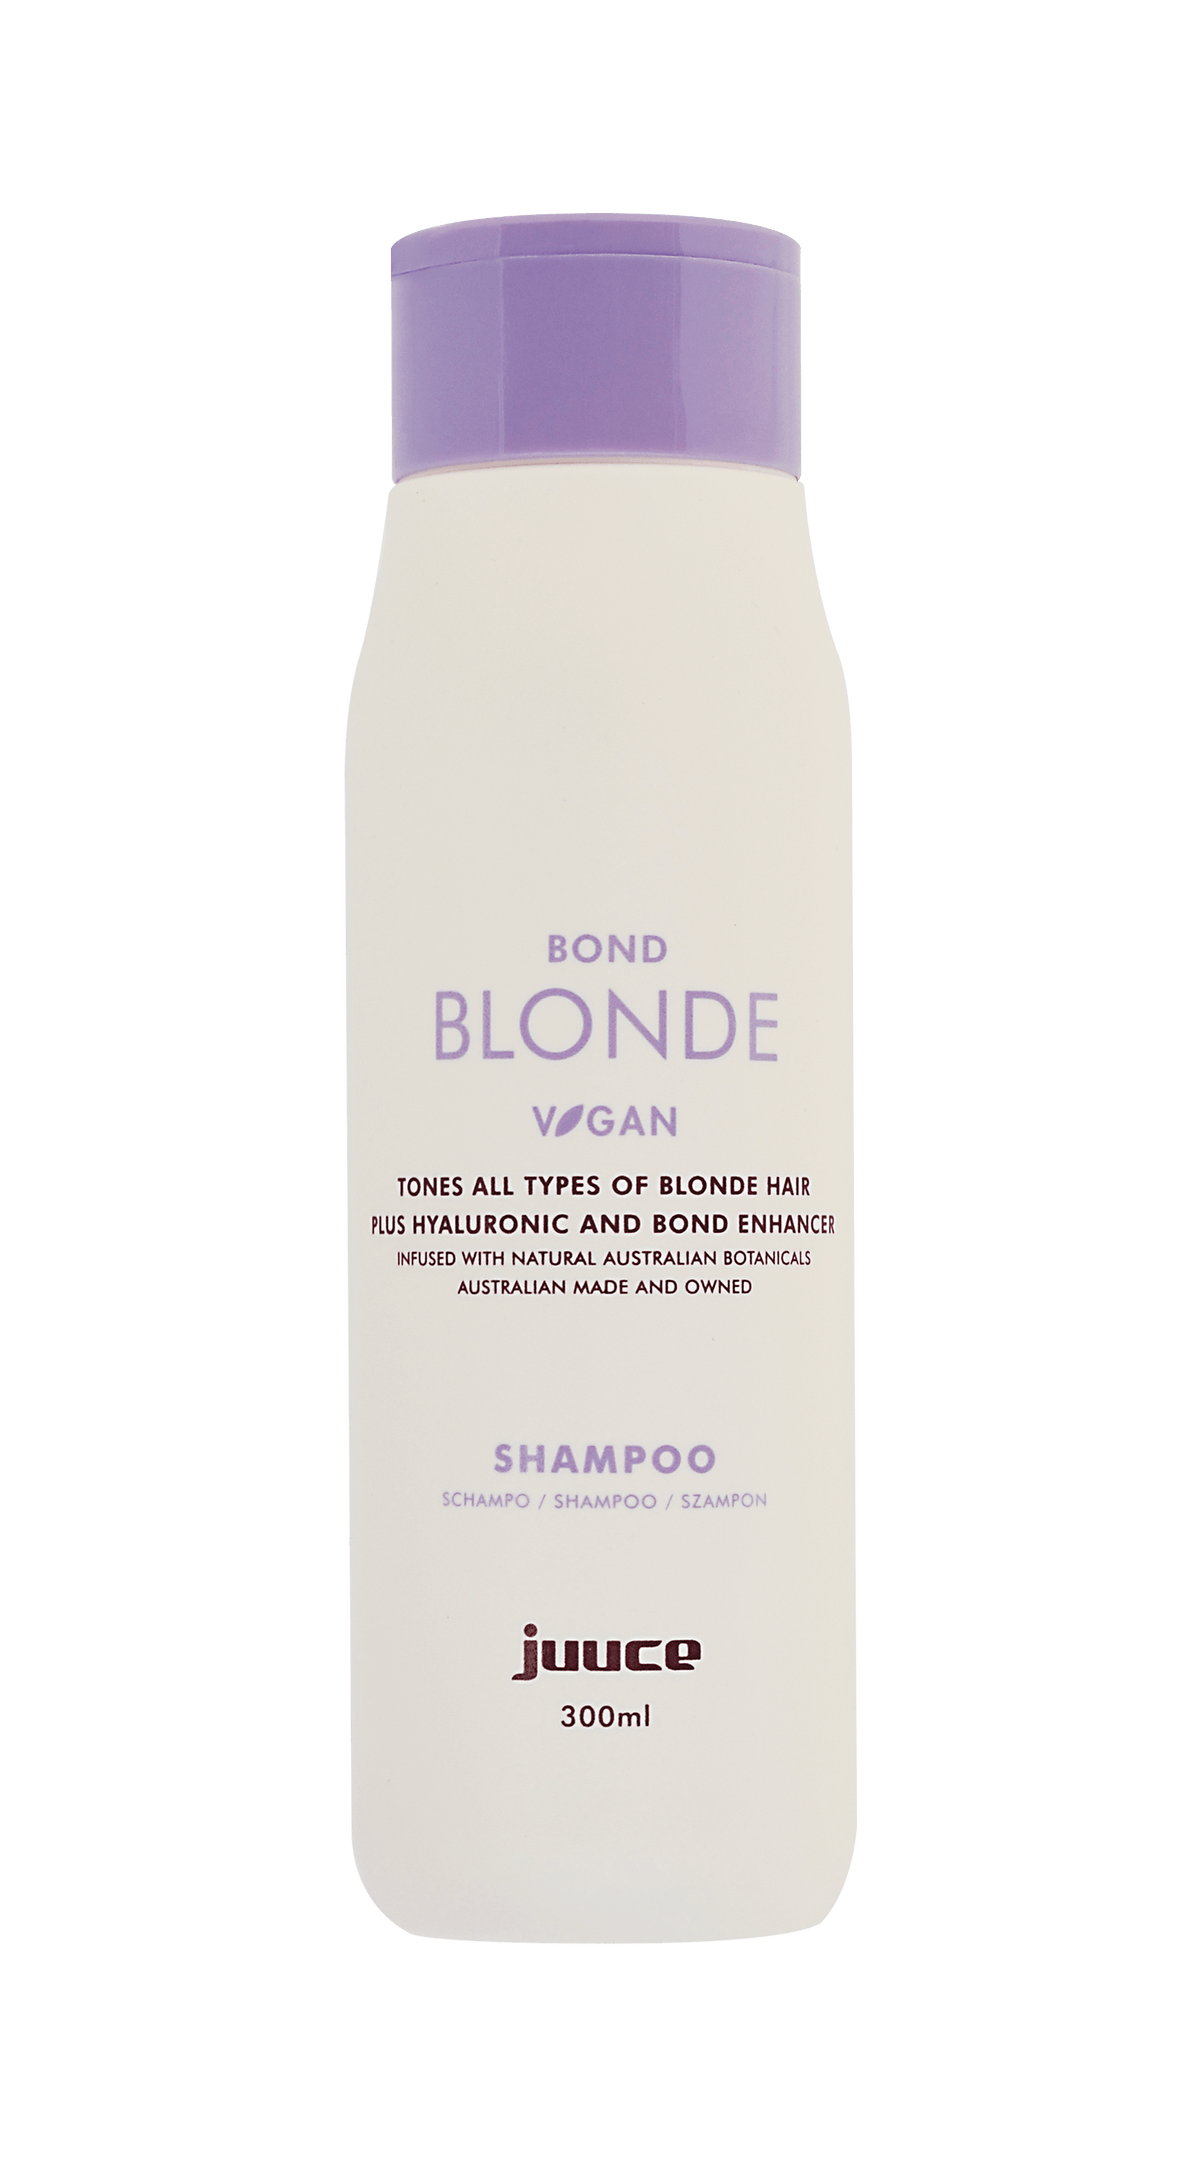 JUUCE BOND BLONDE SHAMPOO